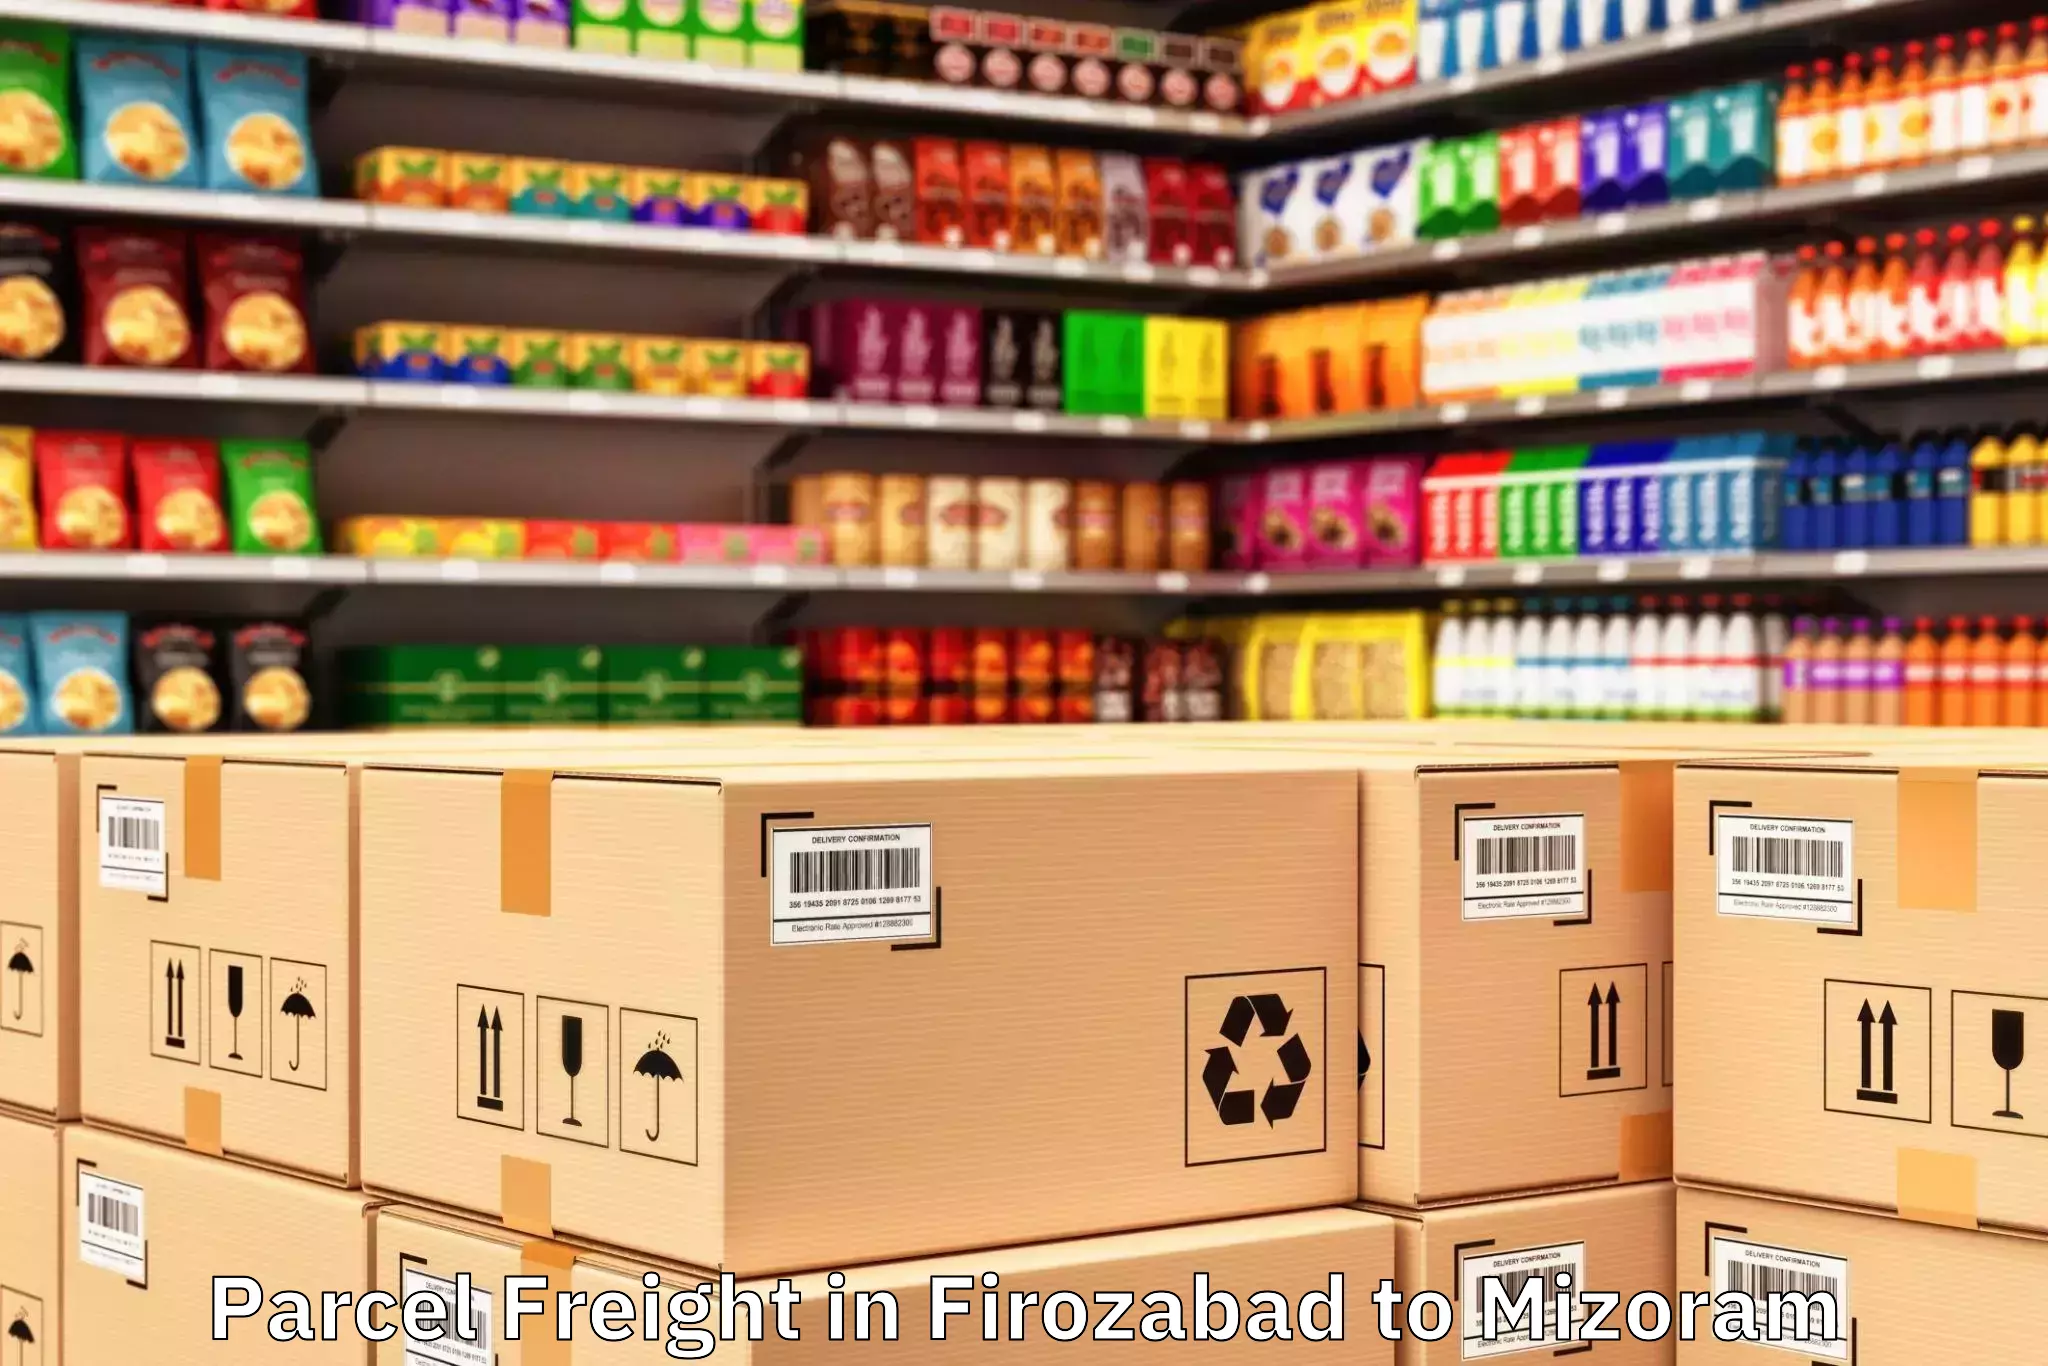 Professional Firozabad to Mizoram Parcel Freight